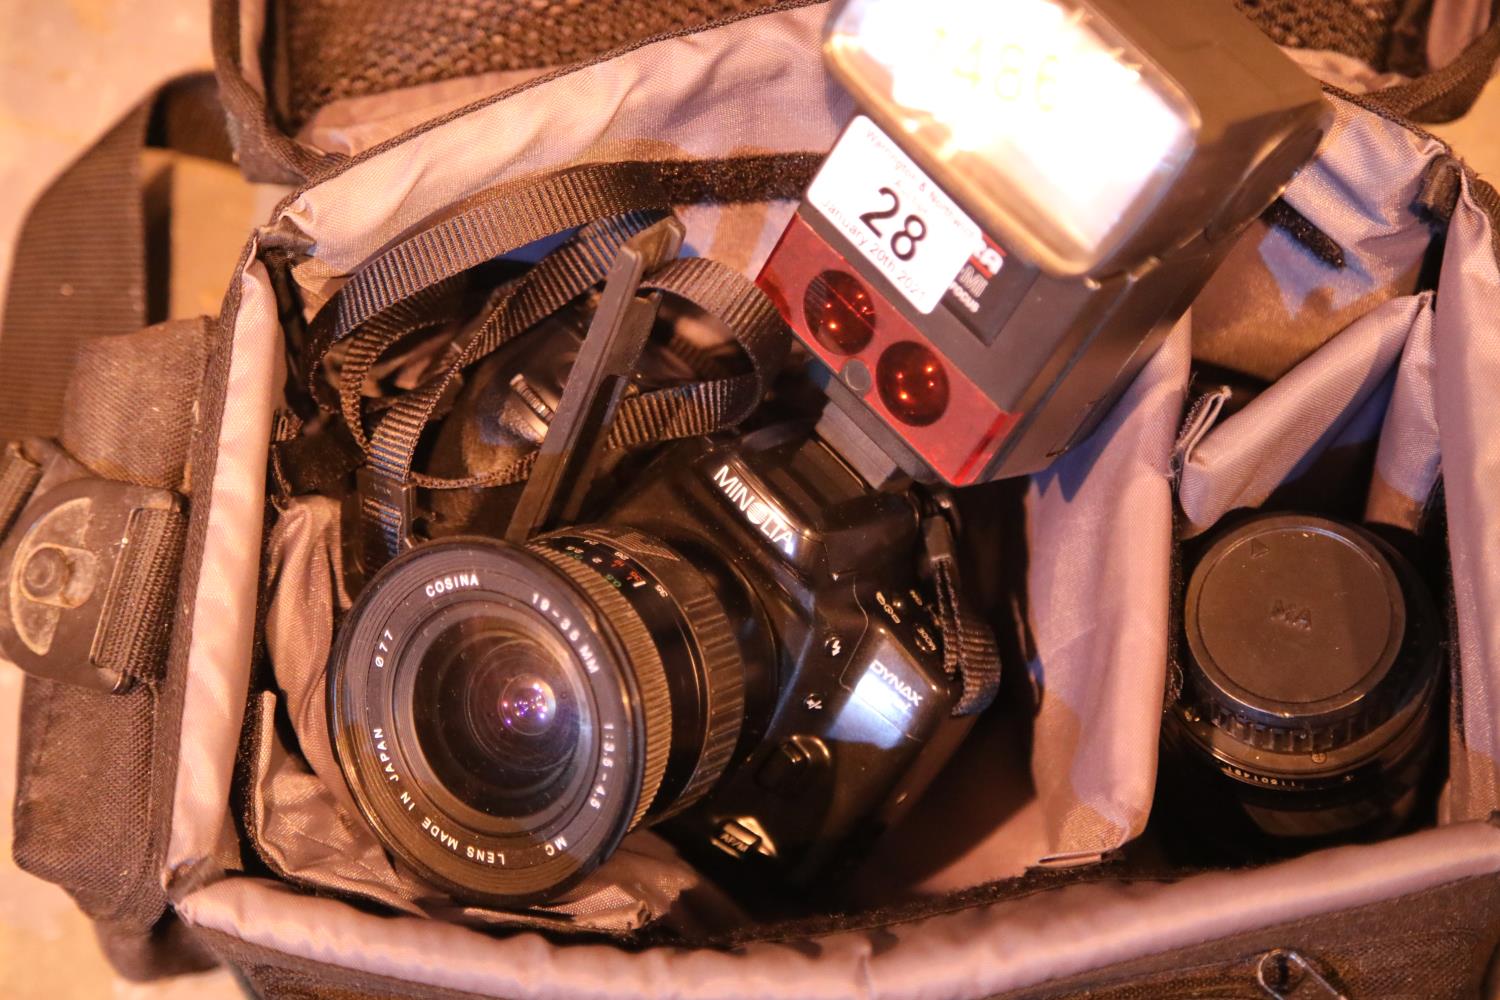 Case holder containing a Minolta Dynax 500 51 camera, a Cobra 700AF-M-1 auto focus flash unit and